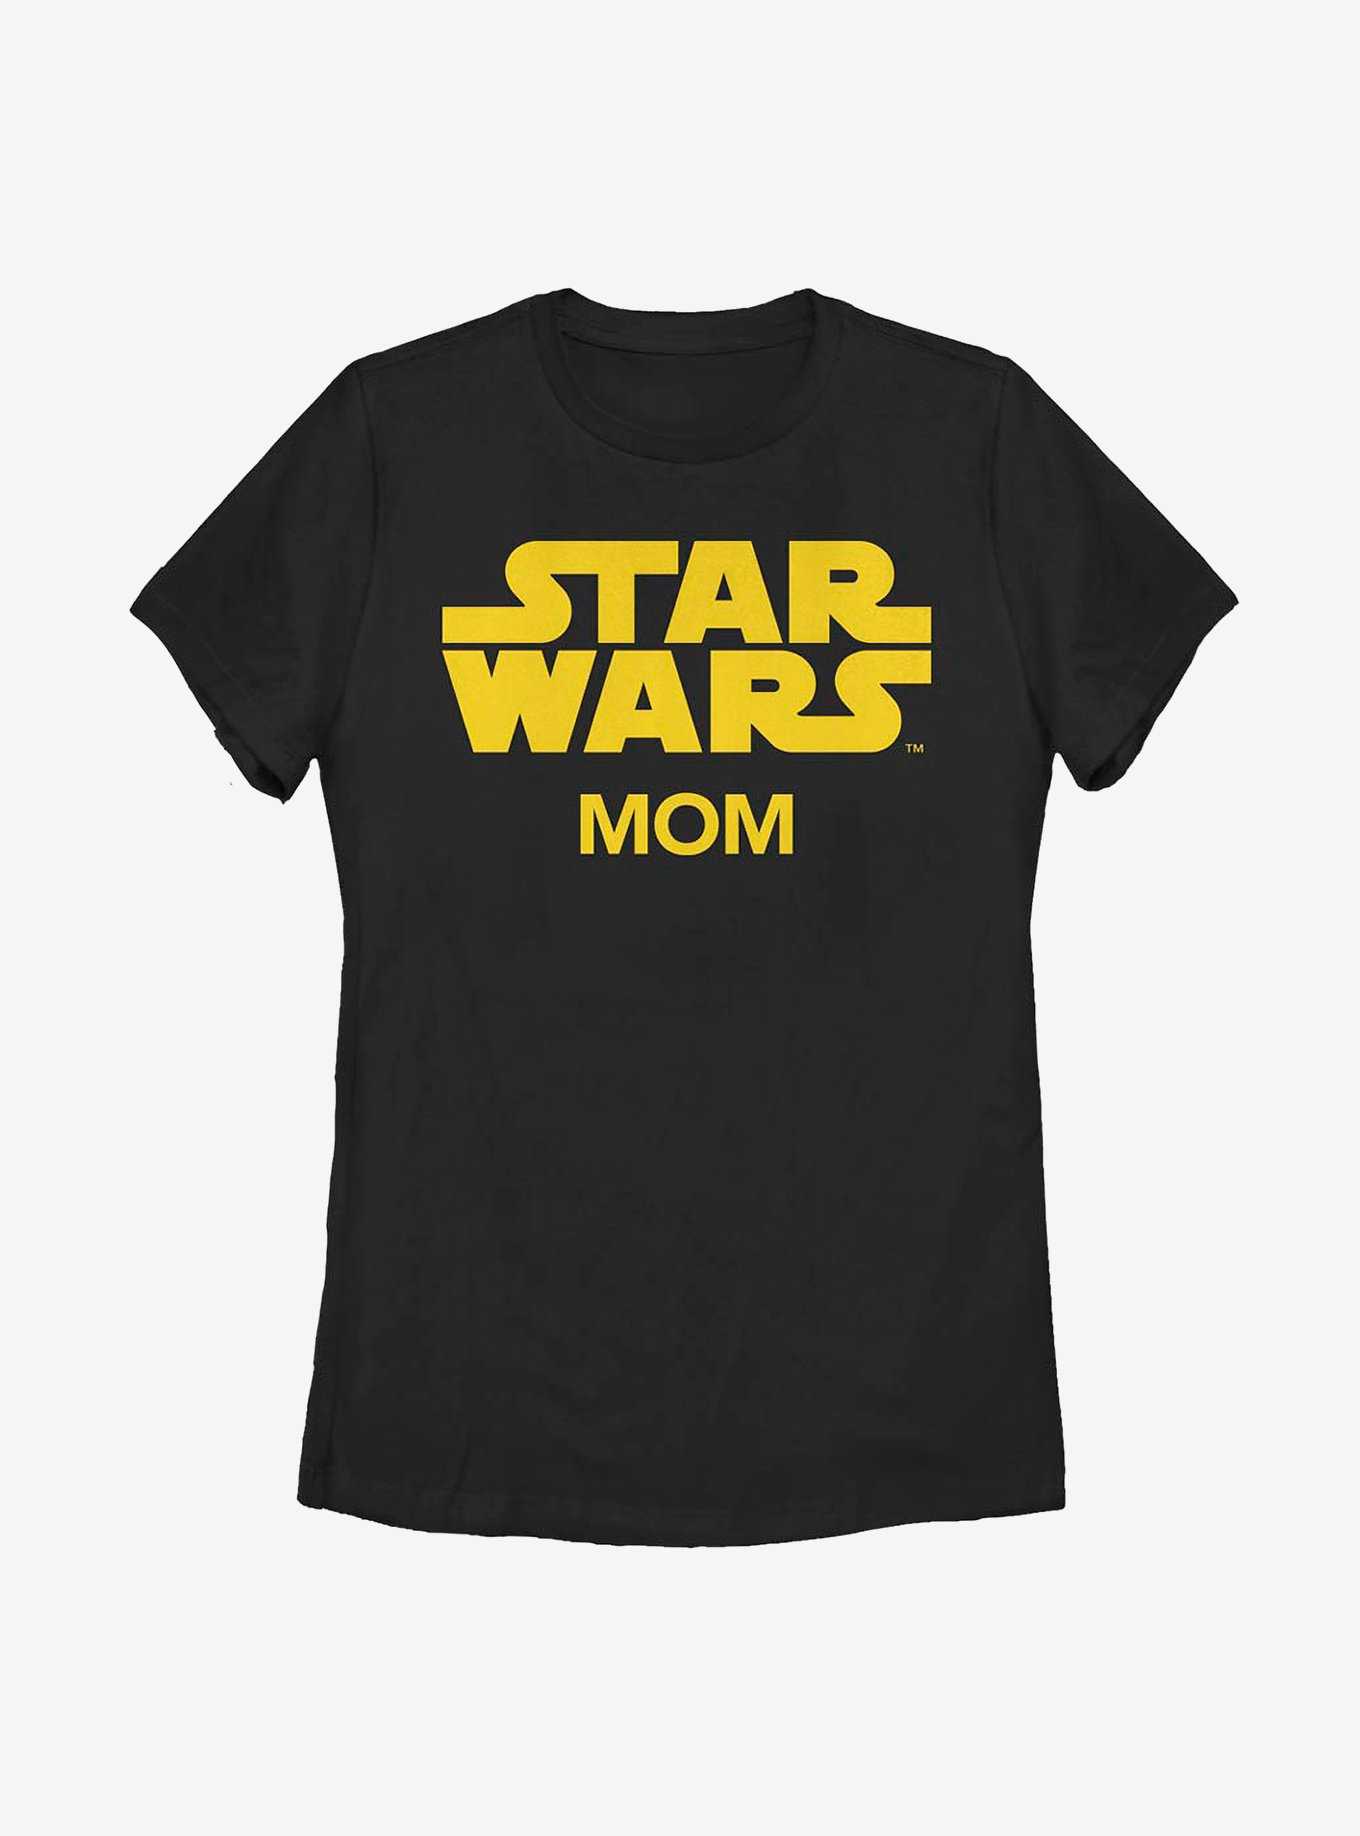 Star Wars Star Wars Mom Womens T-Shirt, , hi-res